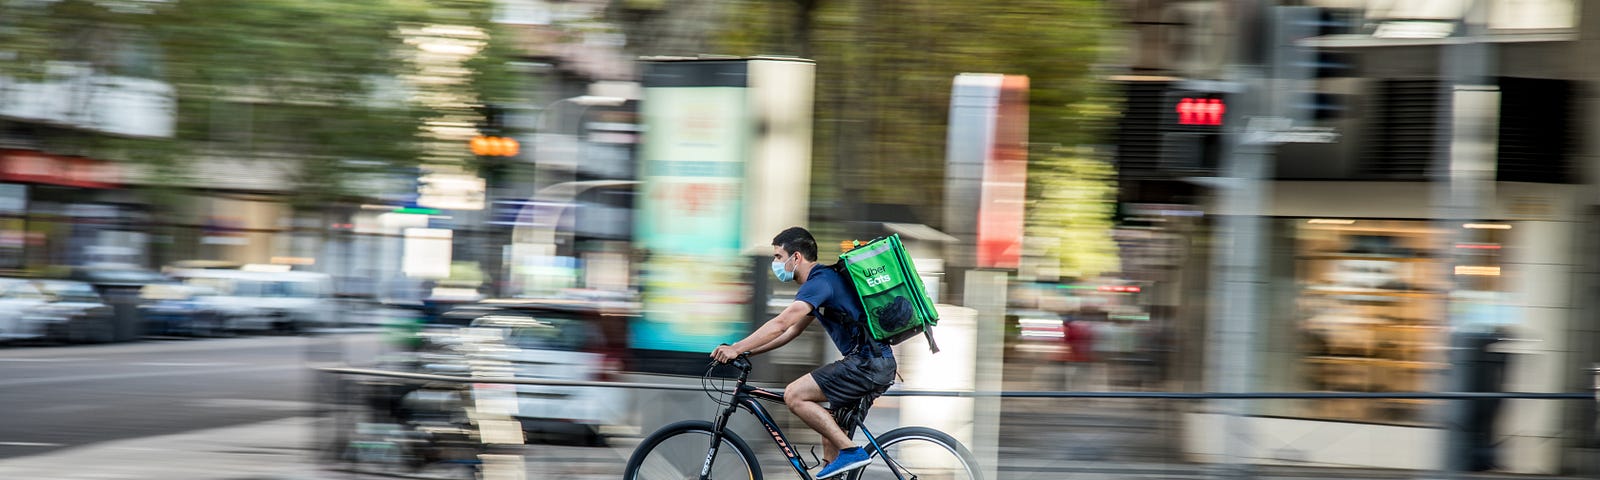 Rider on wheels, delivering food.